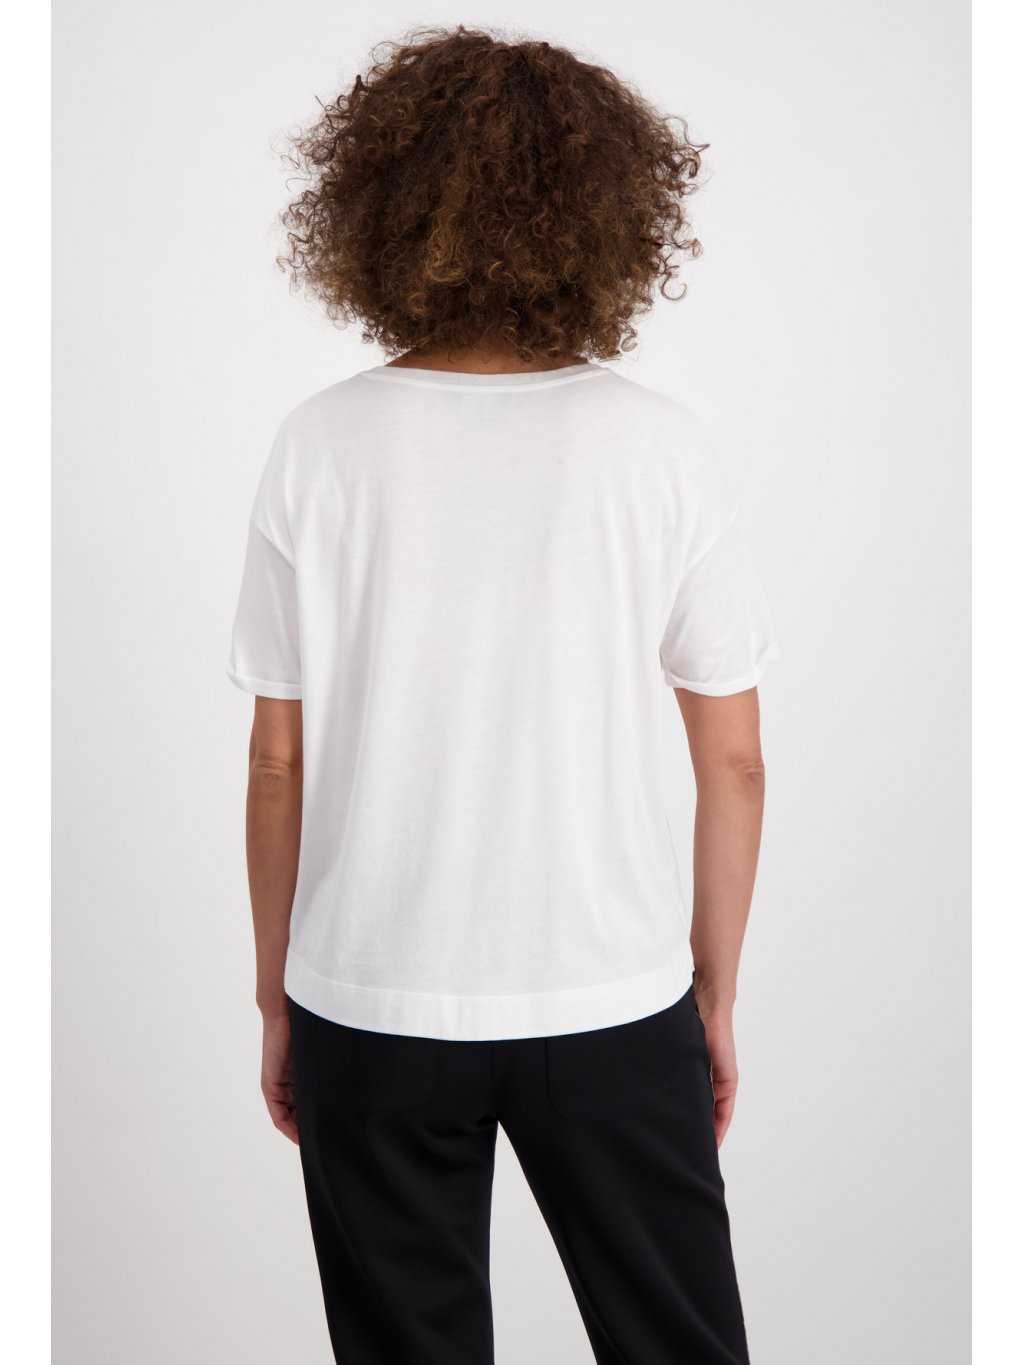 Tričko Monari 6796 bílé s grafikou v krokantově hnědé